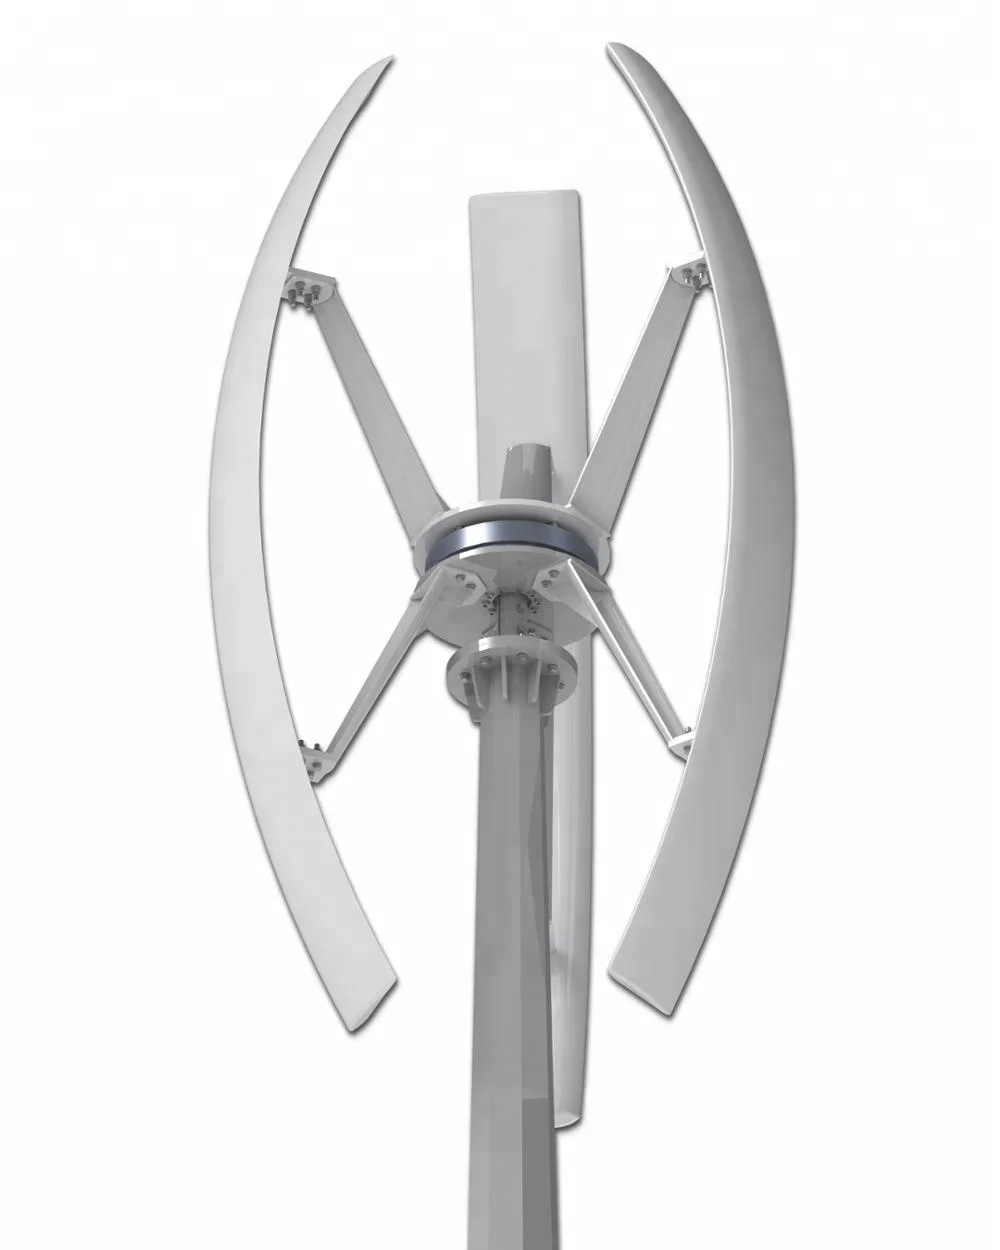 vertical wind turbine design